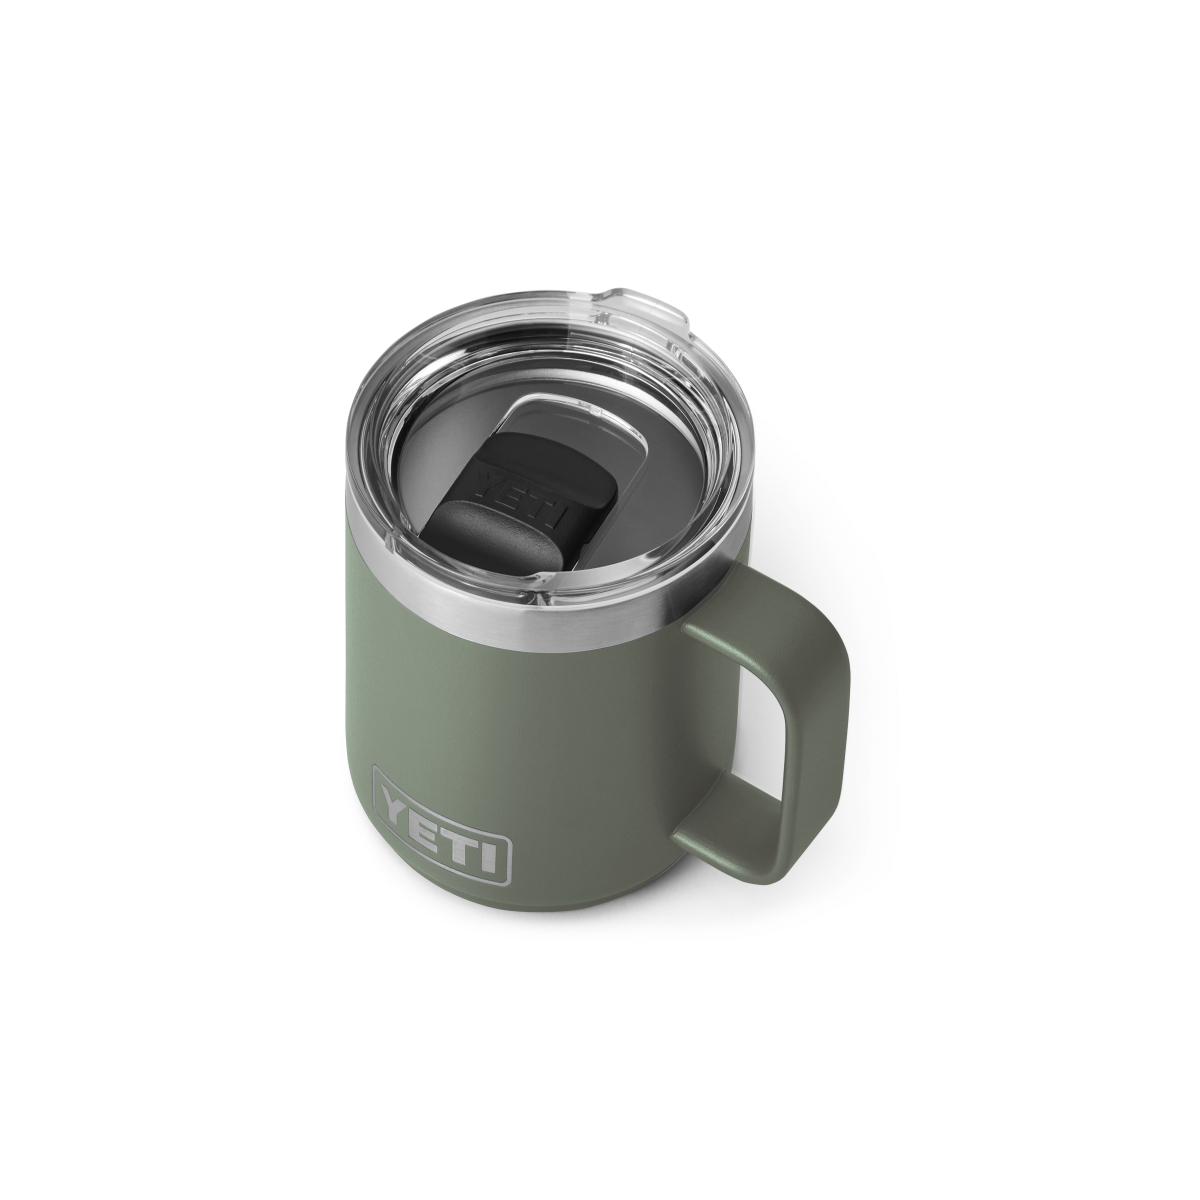 YETI Rambler 6 oz Stackable Mug, Stainless Steel, Vacuum Insulated  Espresso/Coffee Mug, 2 Pack, Black